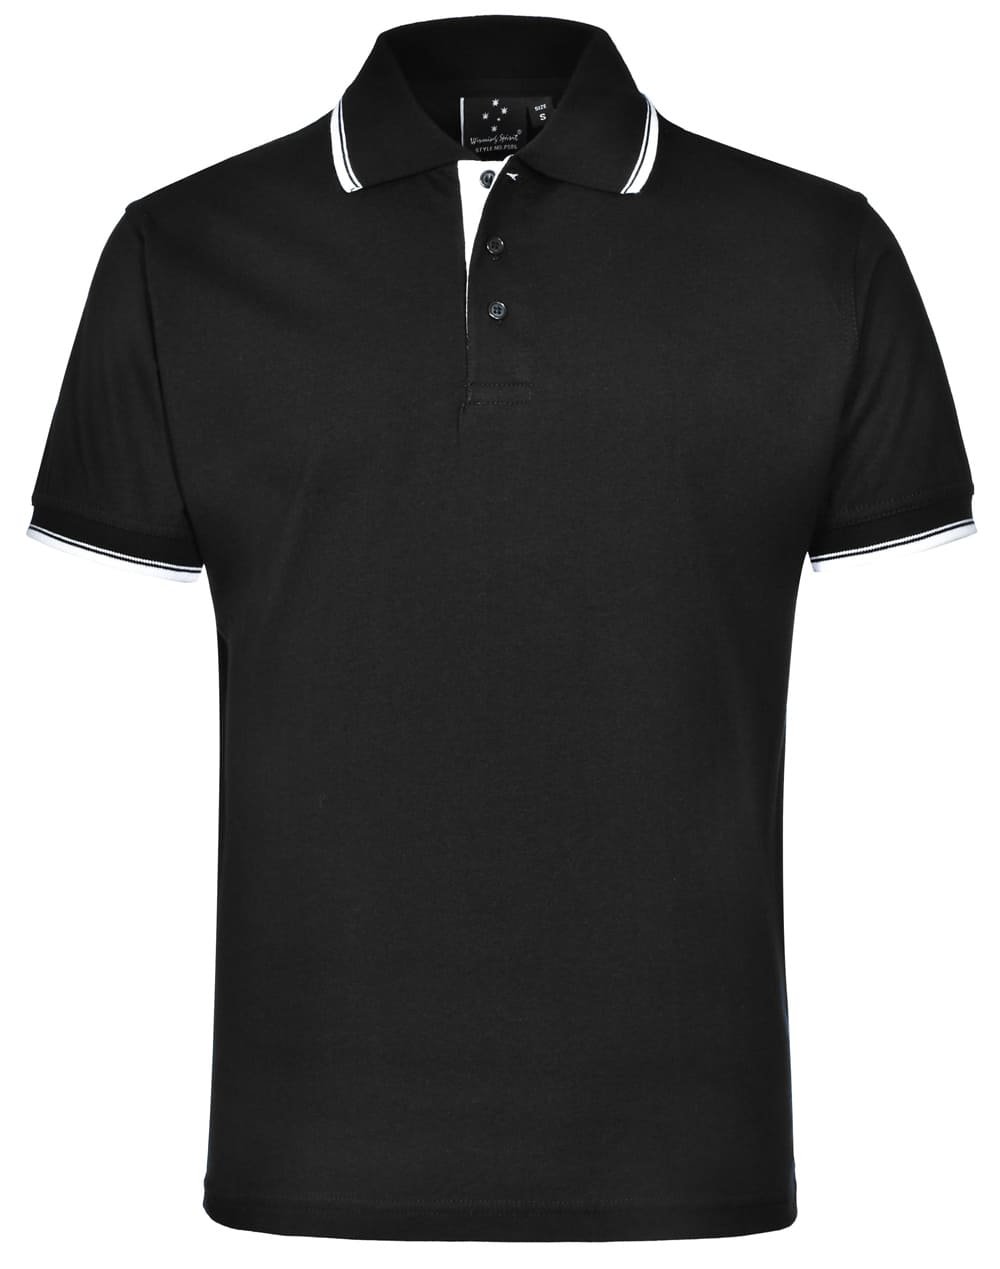 Custom (Black-White) Macquarie Unisex Cotton Kit Polos Online in Perth